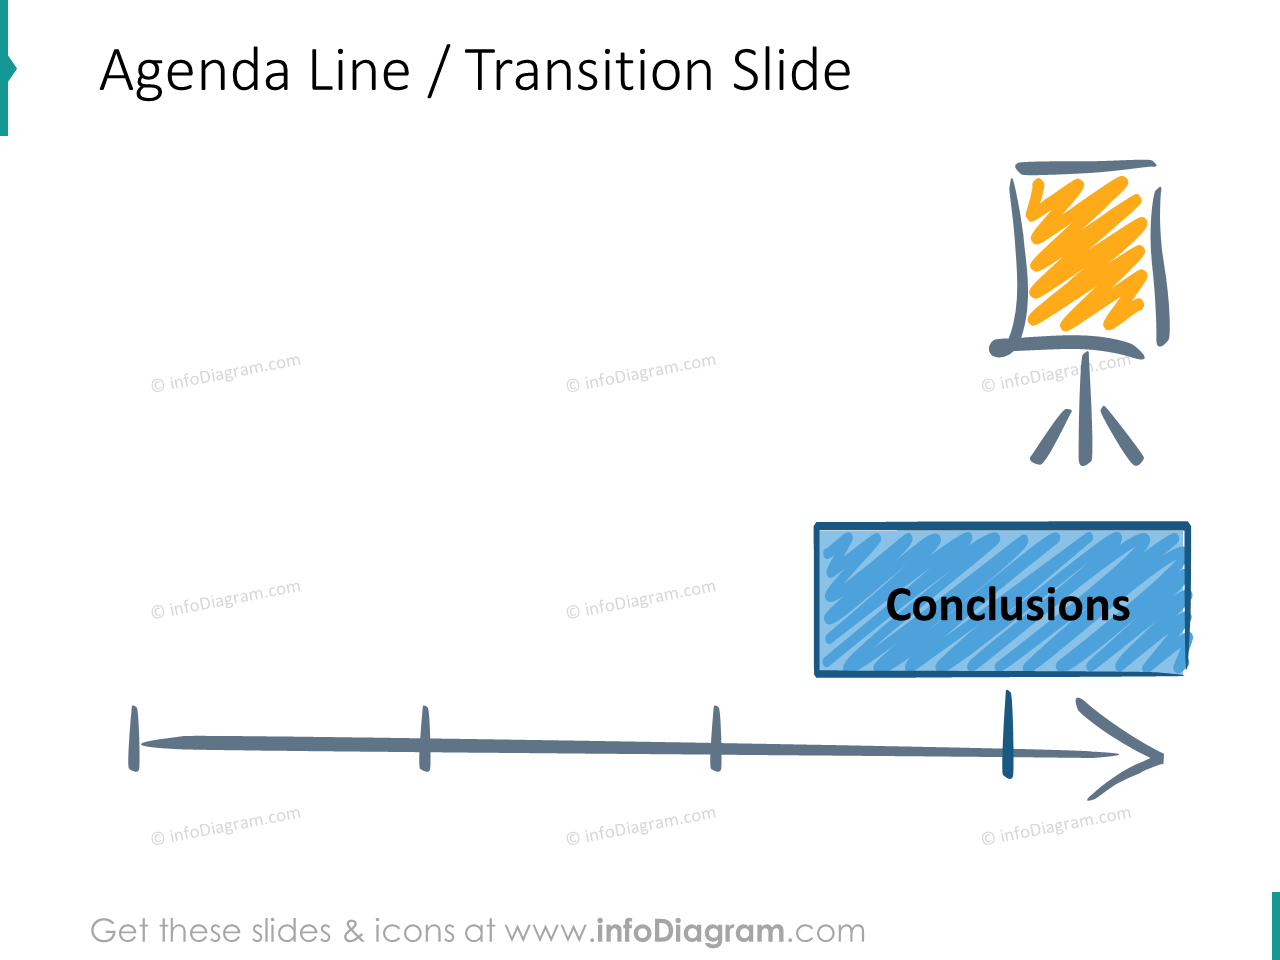 motivation training agenda transition slide conclusion icons ppt clipart